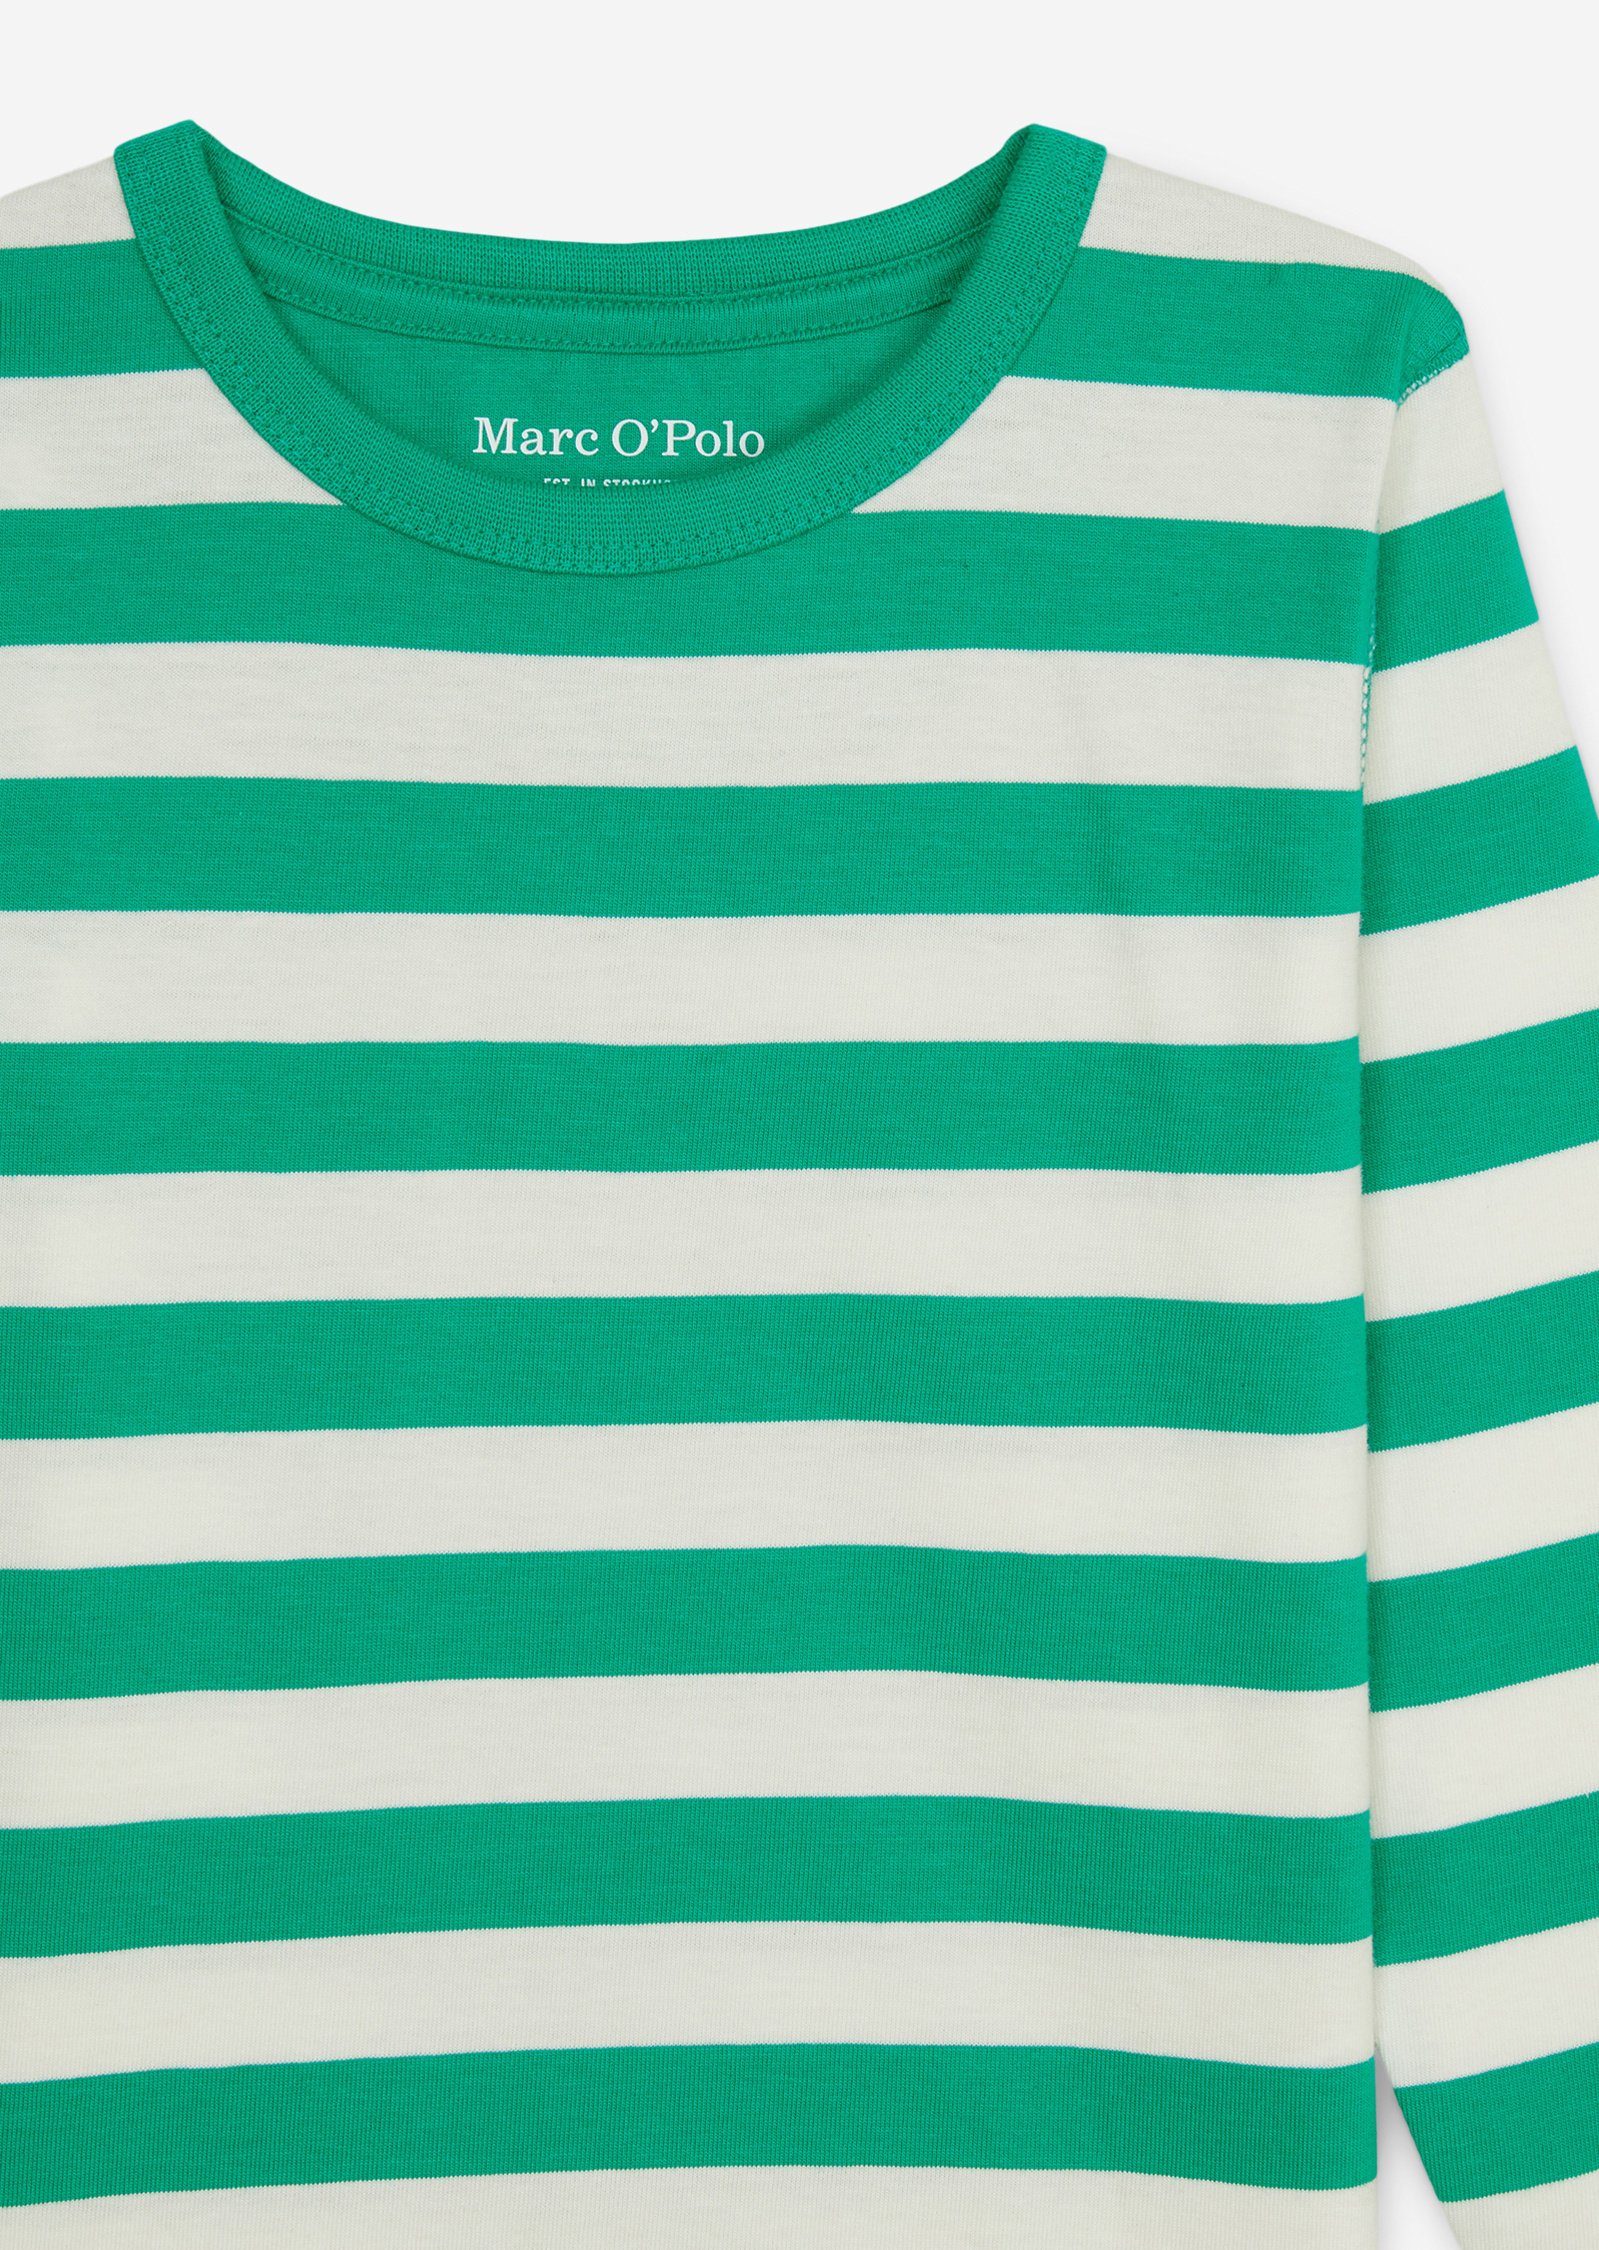 O'Polo Langarmshirt Marc aus grün Bio-Baumwoll-Jersey